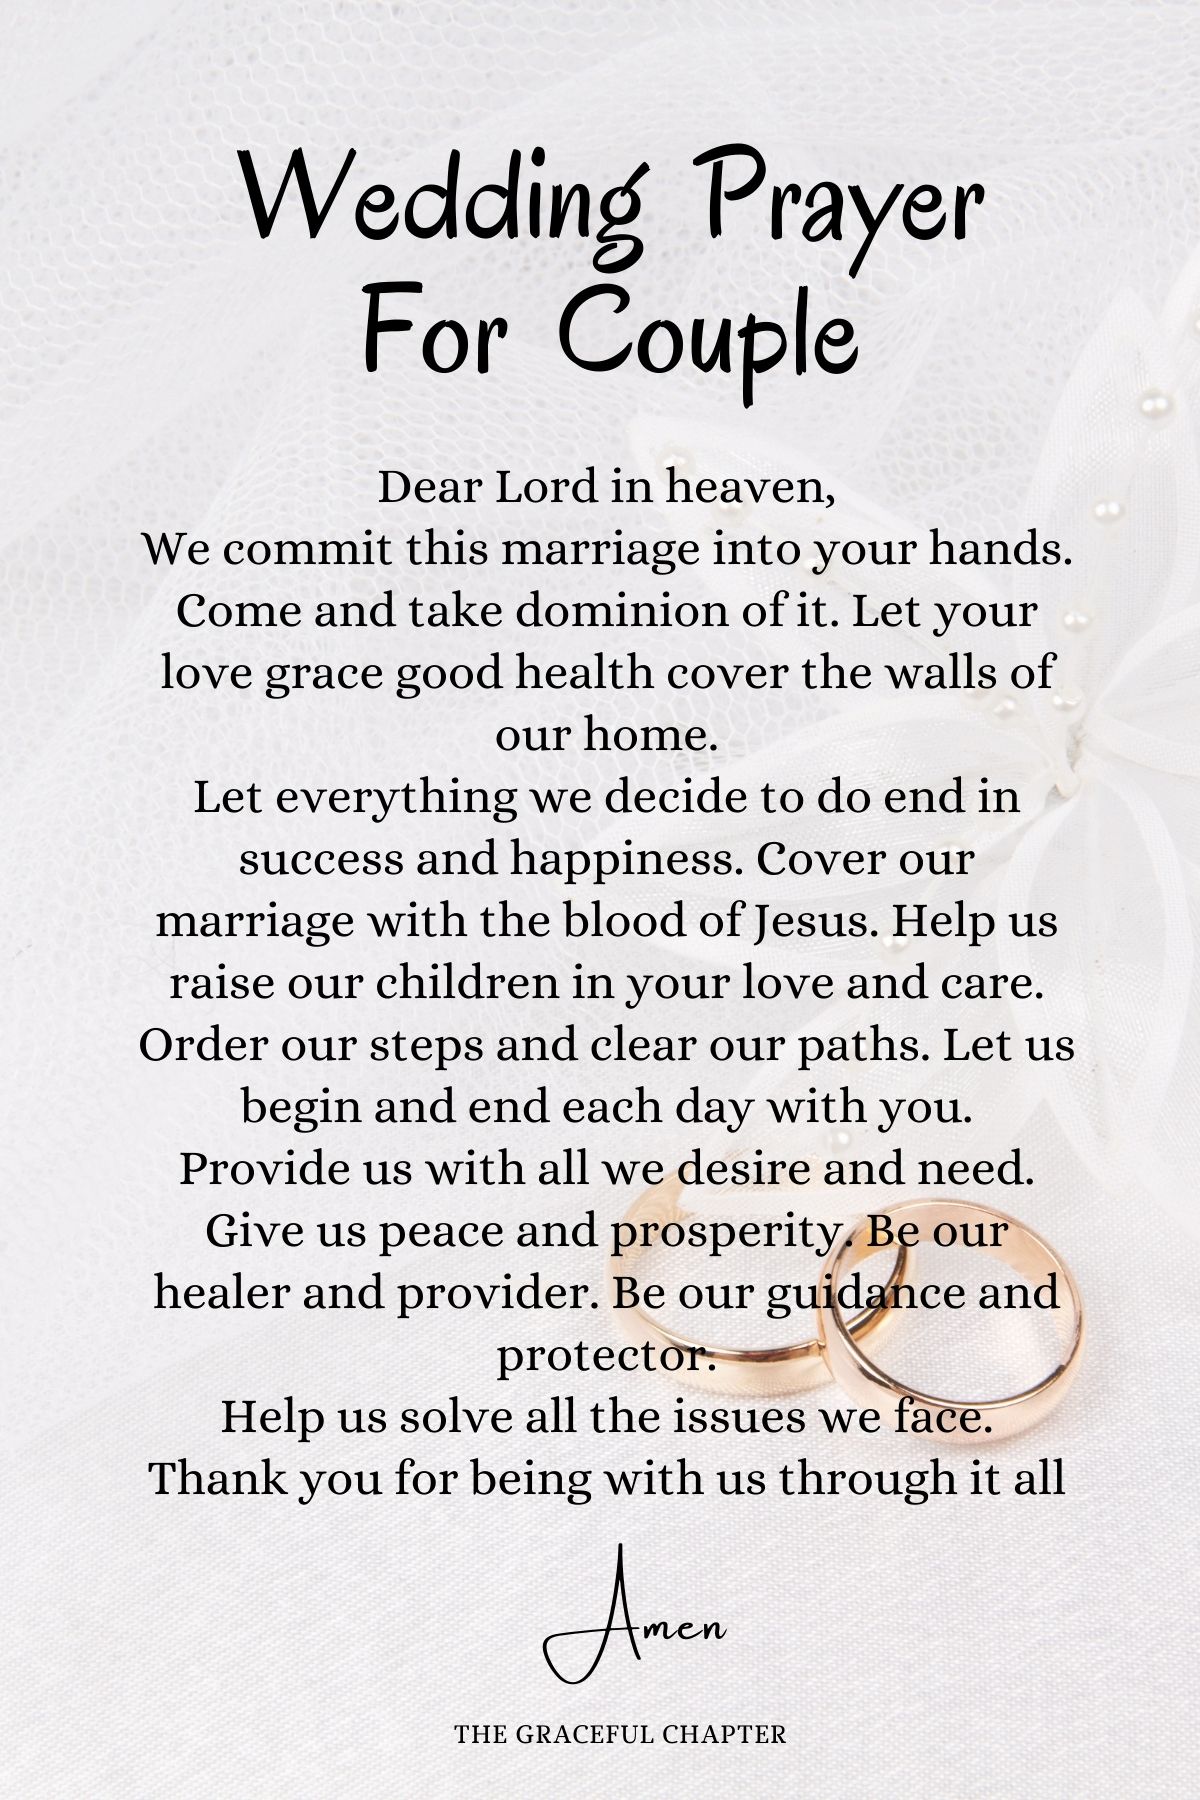 Wedding prayer for couple - prayers for wedding